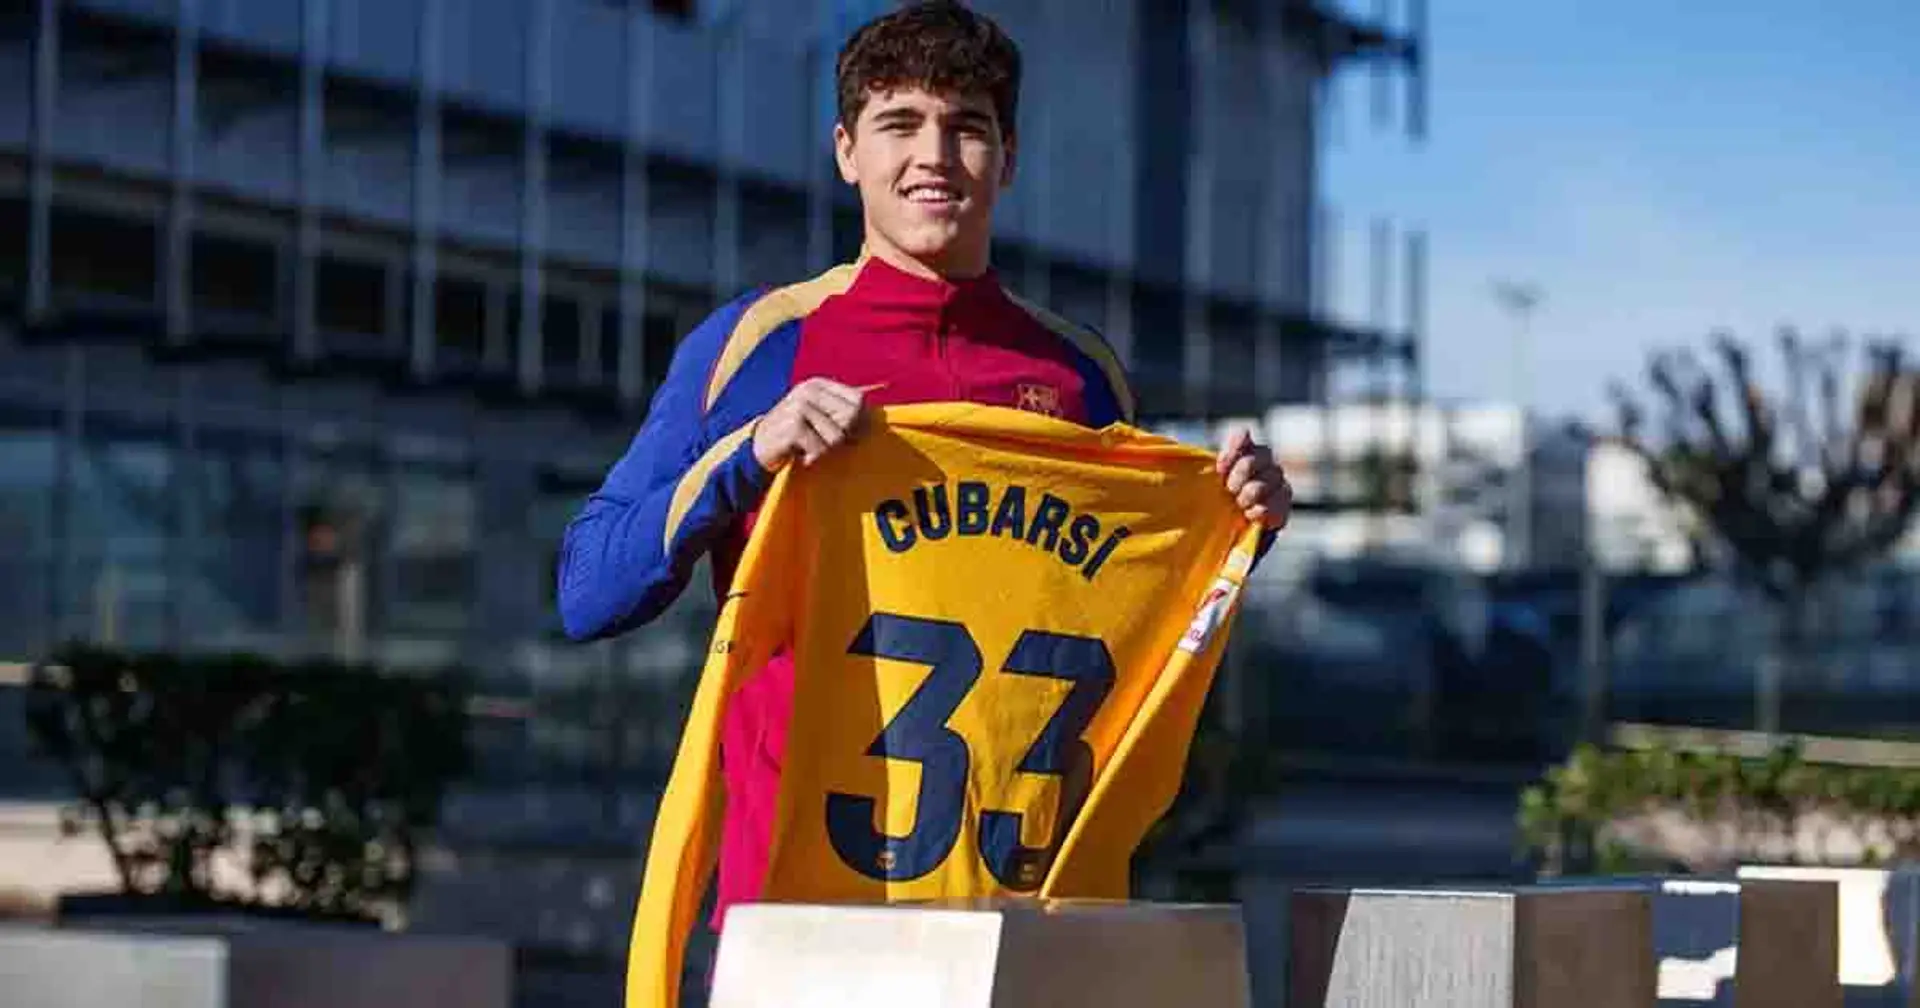 Cubarsi signs three-year Barcelona contract